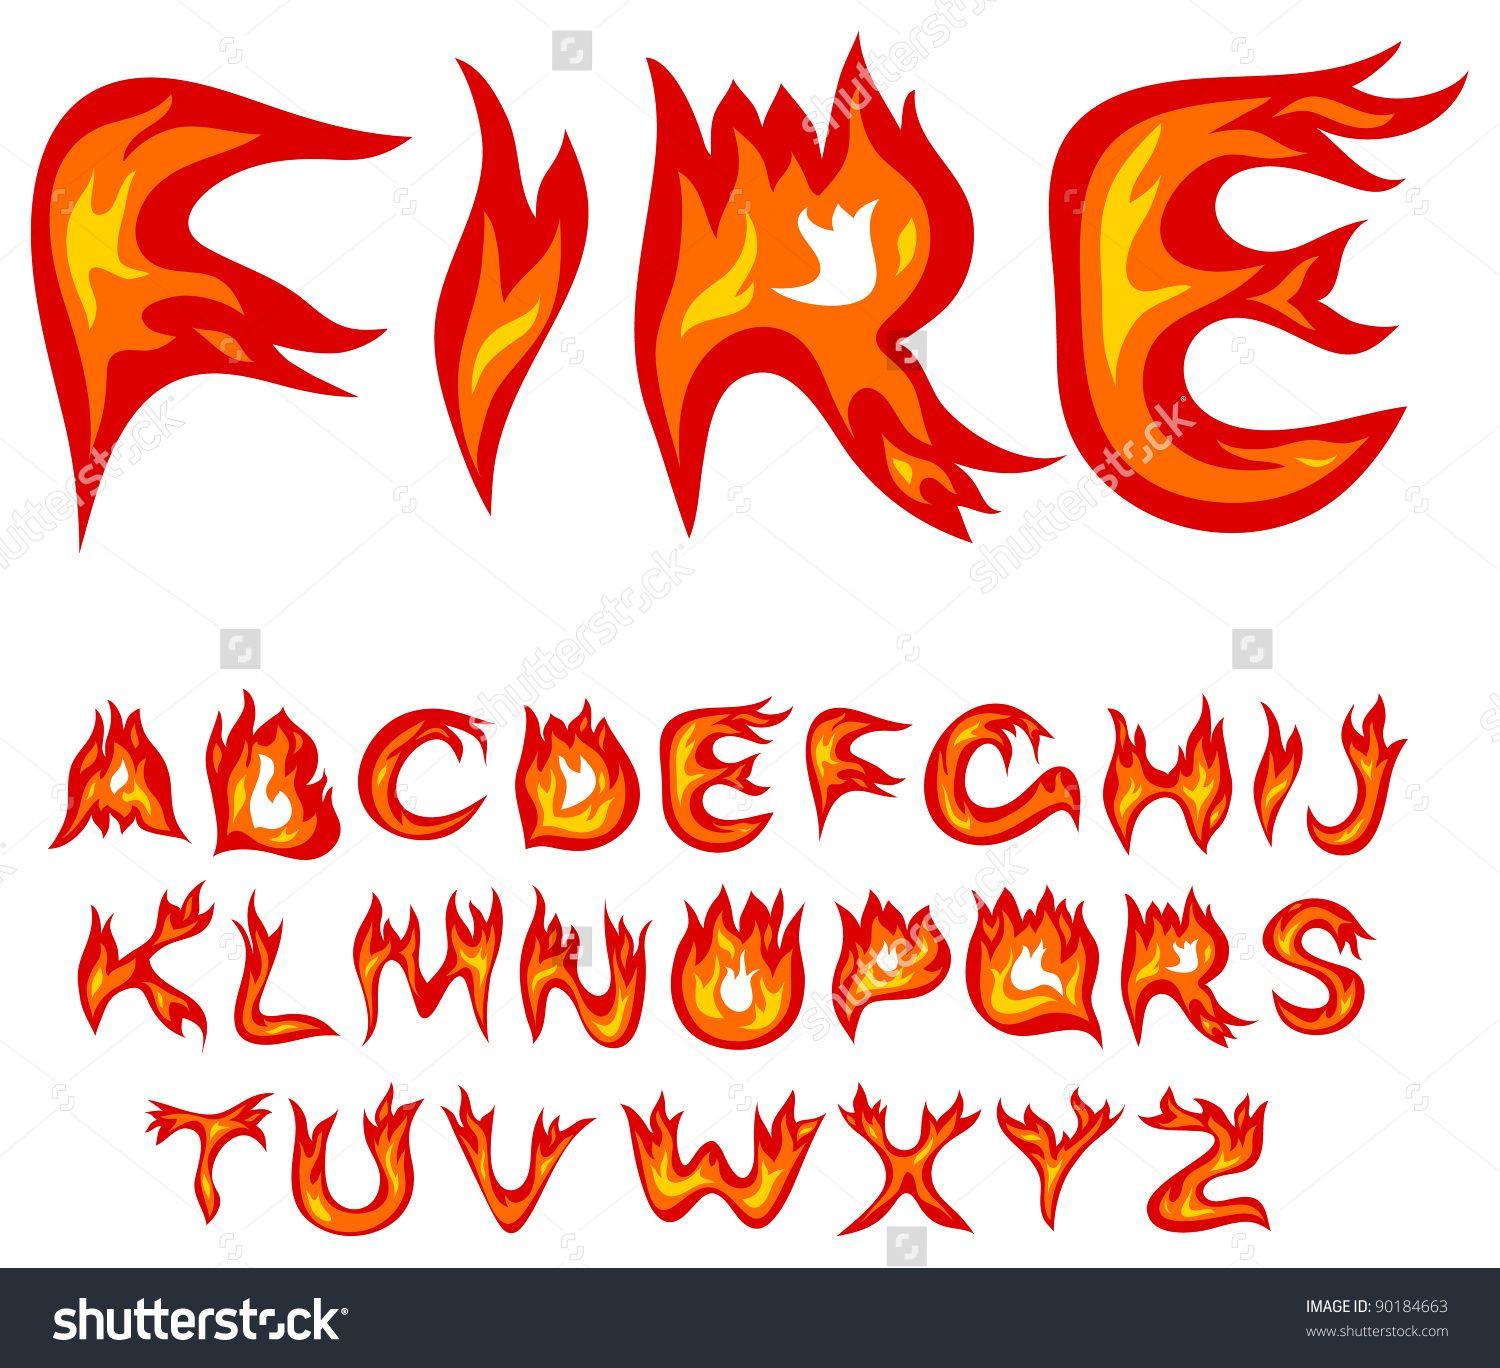 Flaming Letter S Logo - letters as flames vector Design. Lettering